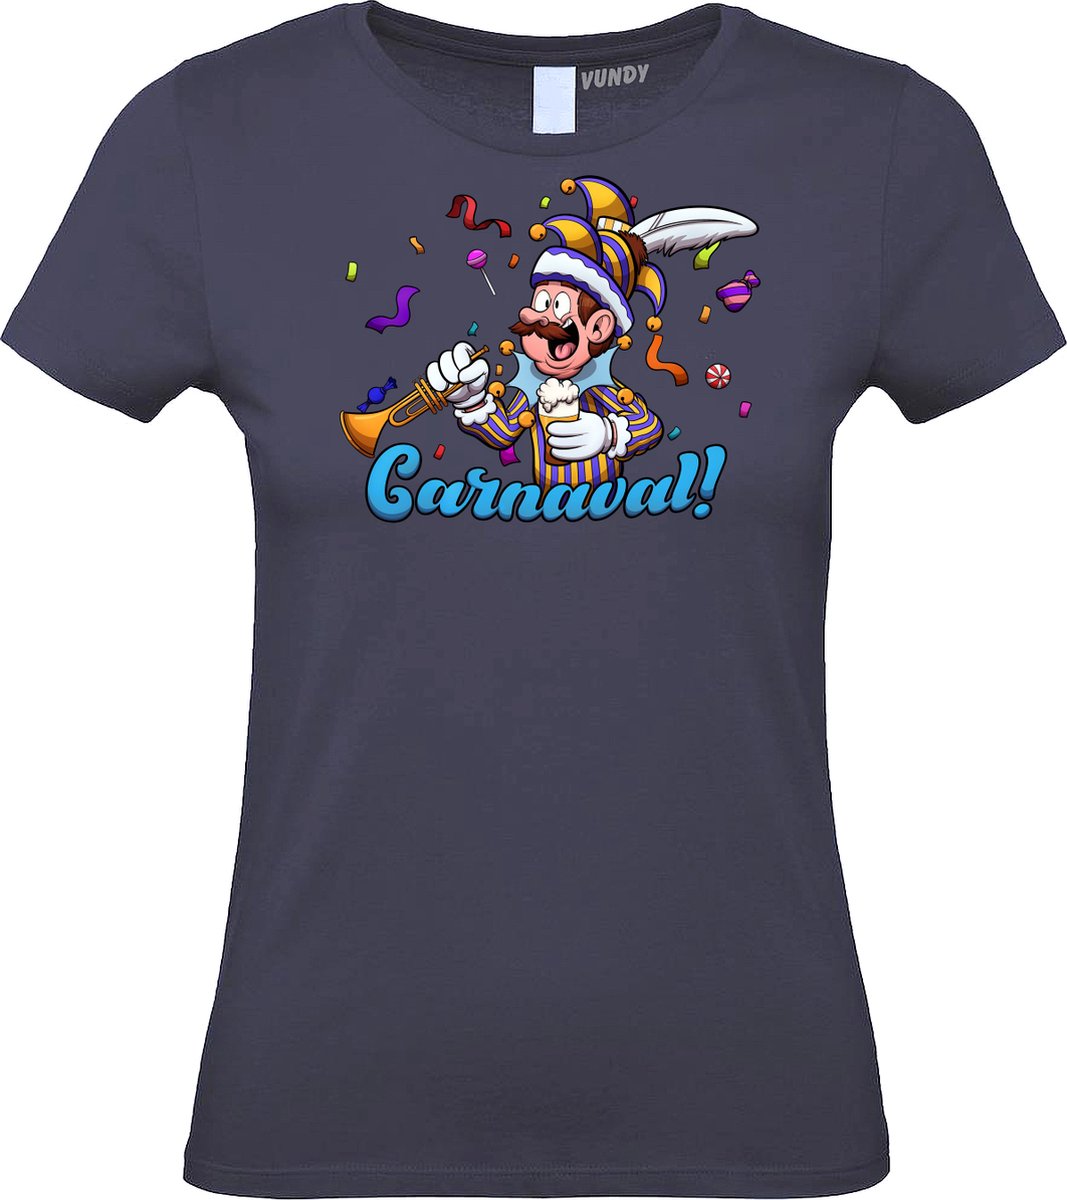 Dames T-shirt Carnavalluh | Carnaval | Carnavalskleding Dames Heren | Navy | maat L